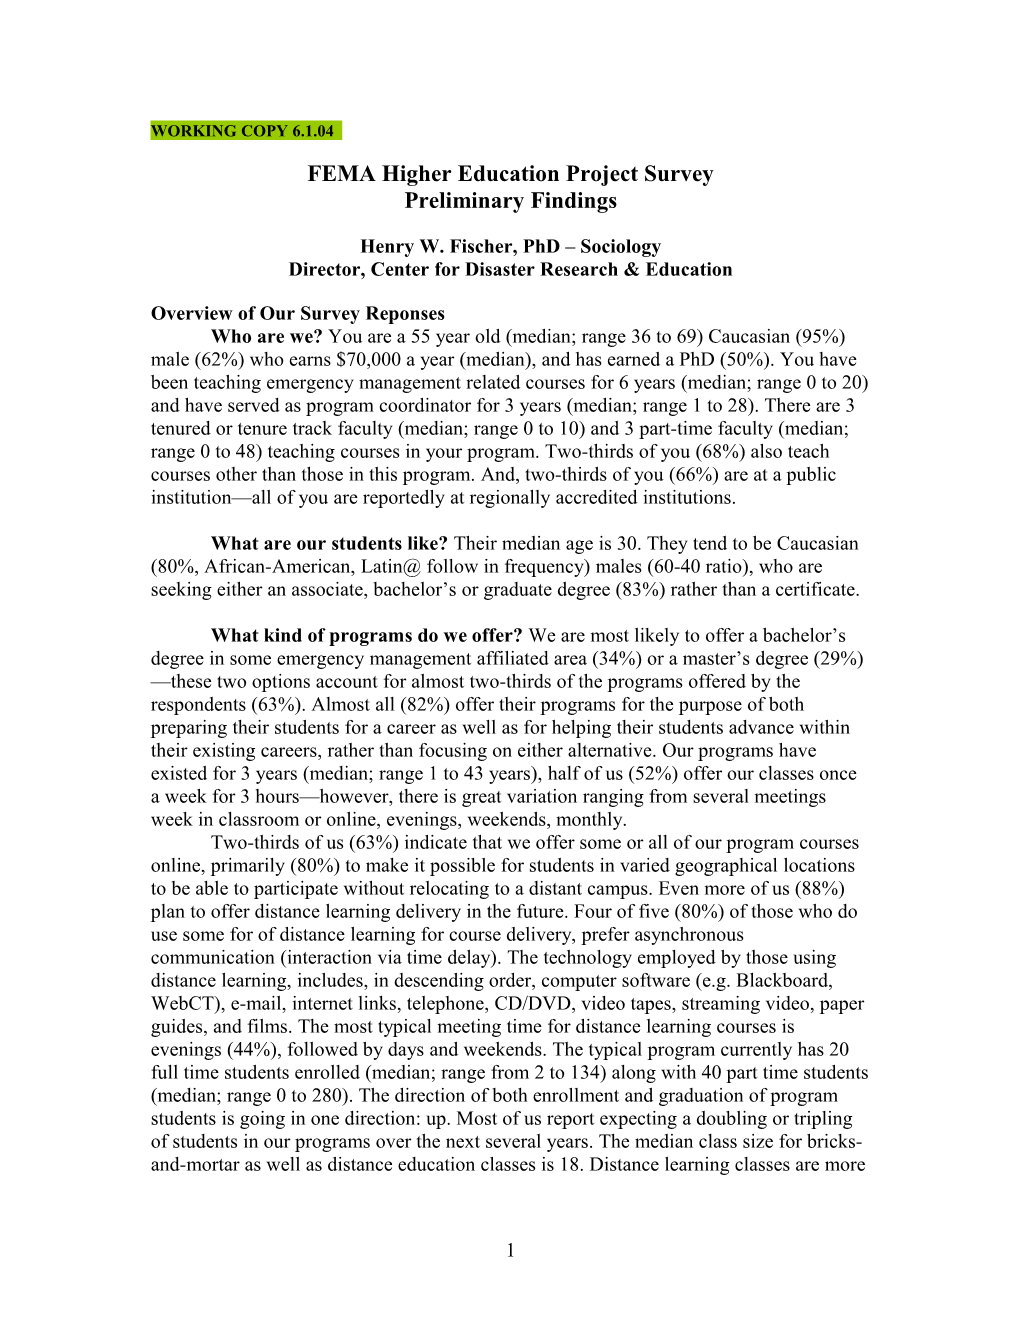 FEMA Higher Education Project Survey